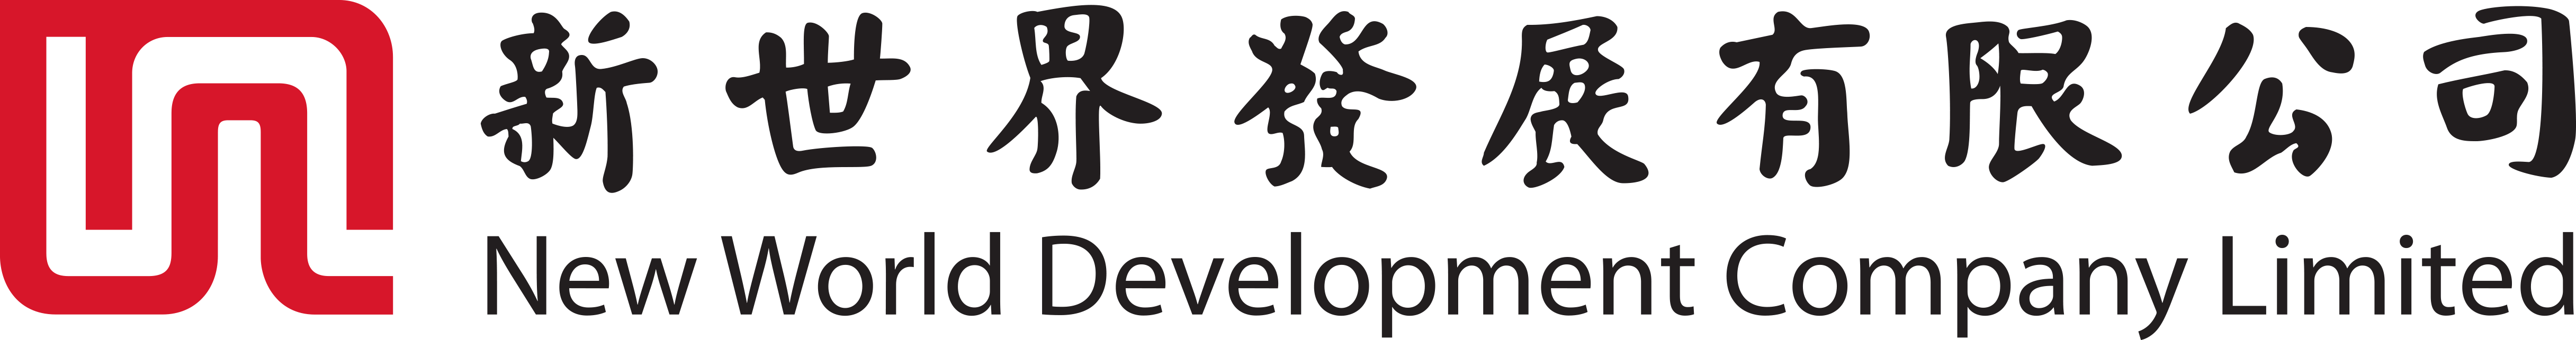 New World Development Company Ltd